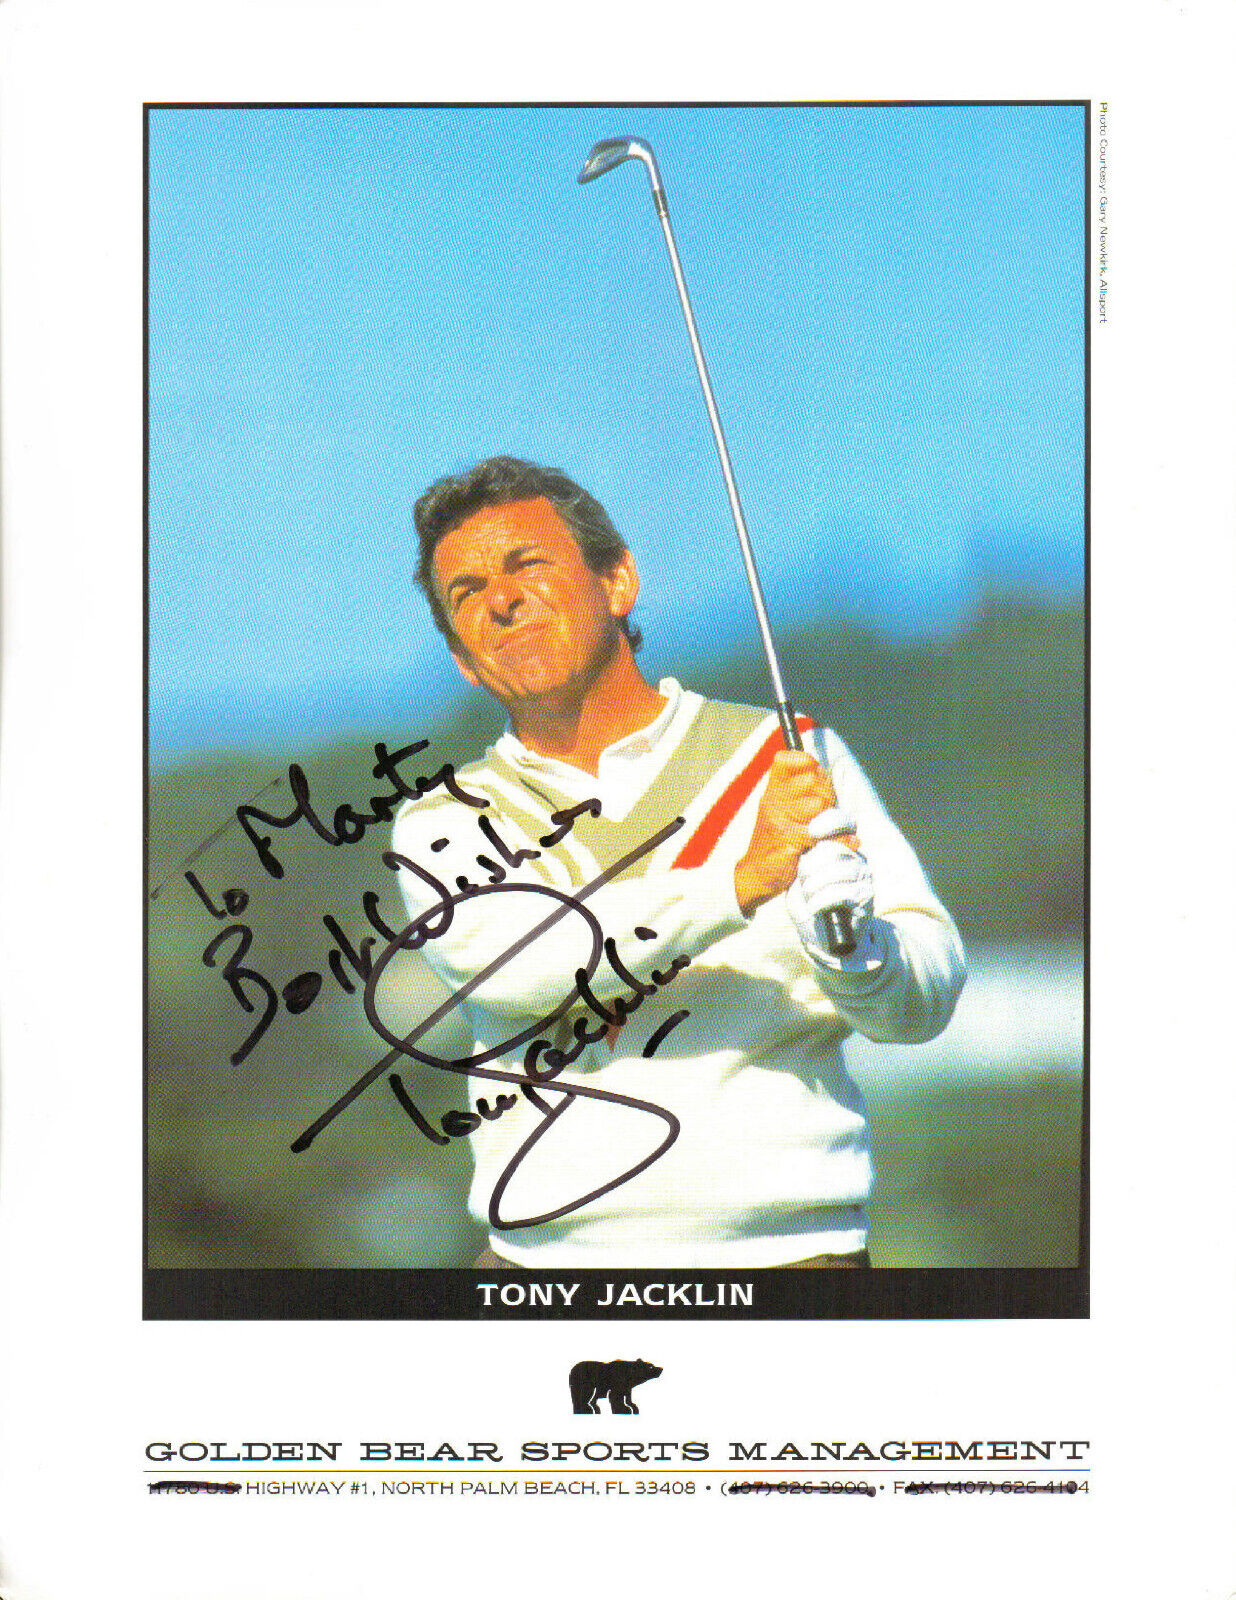 TONY JACKLIN - English Golfer - PGA U.S. Open Champion - Autograph Photo